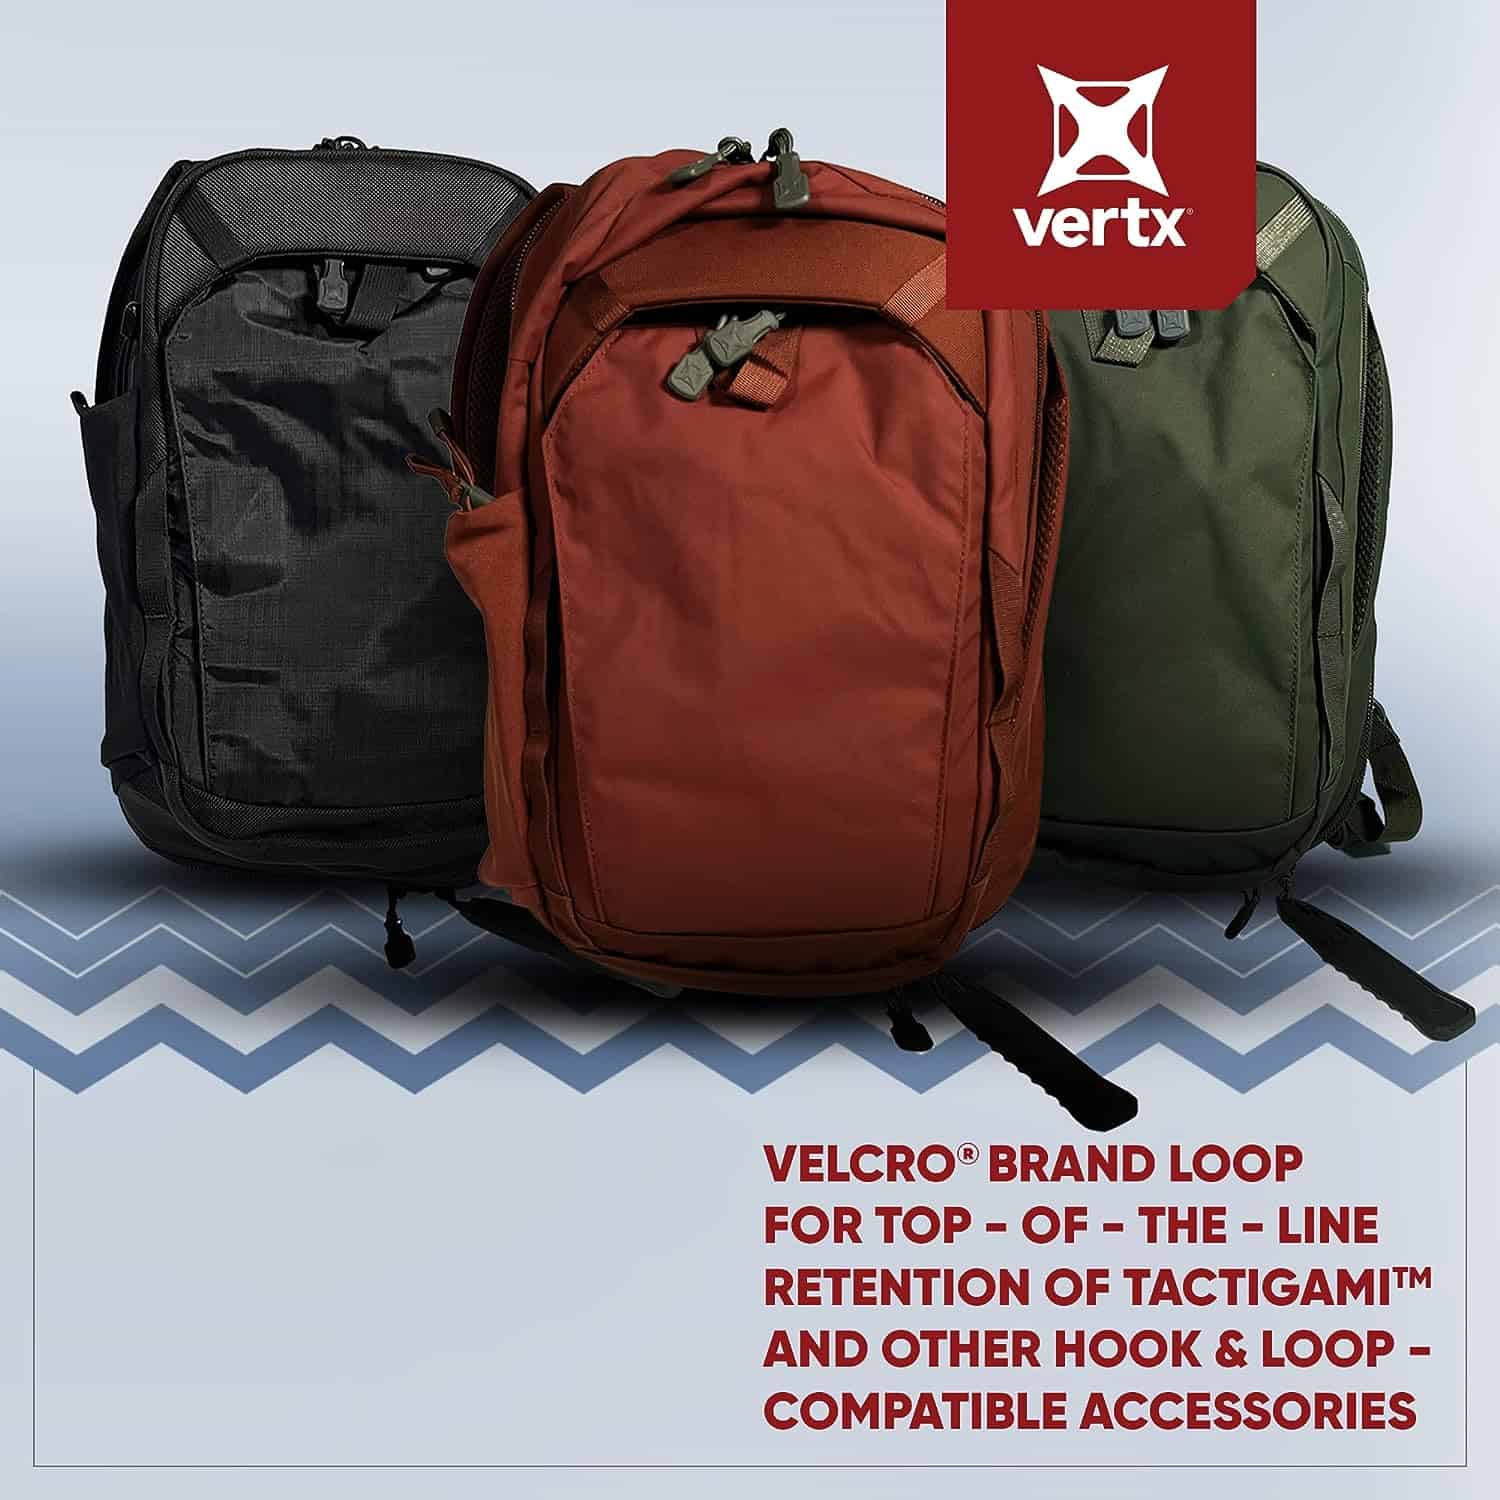 Vertx Transit EDC Tactical Sling 17L Backpack Review